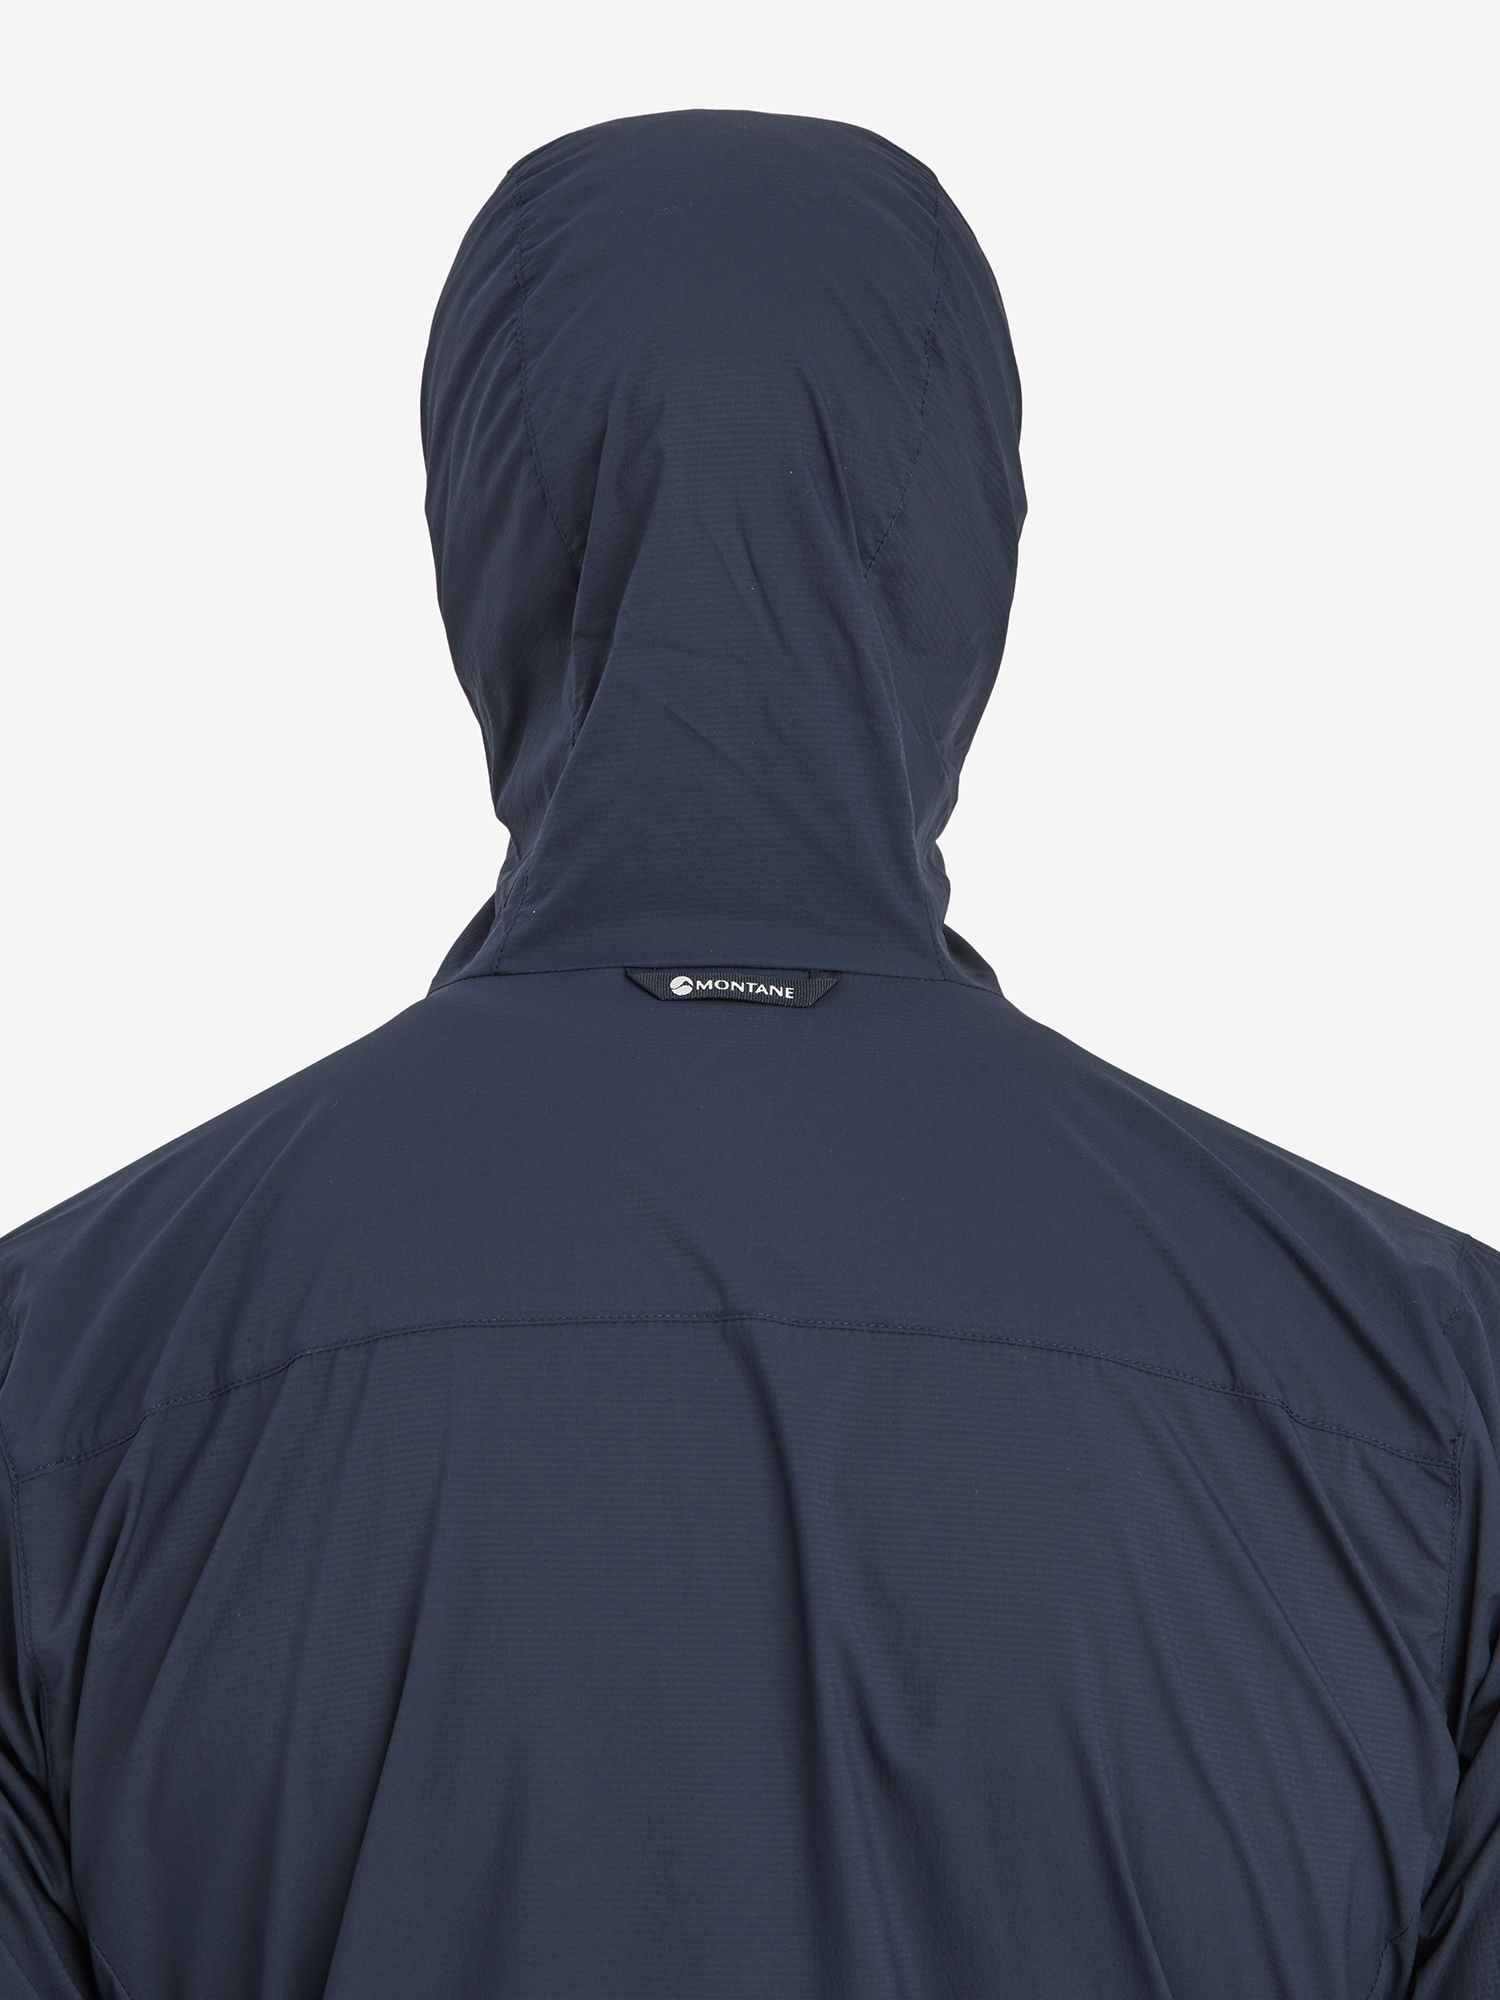 Montane Featherlite Windproof Jacket, Eclipse Blue, S